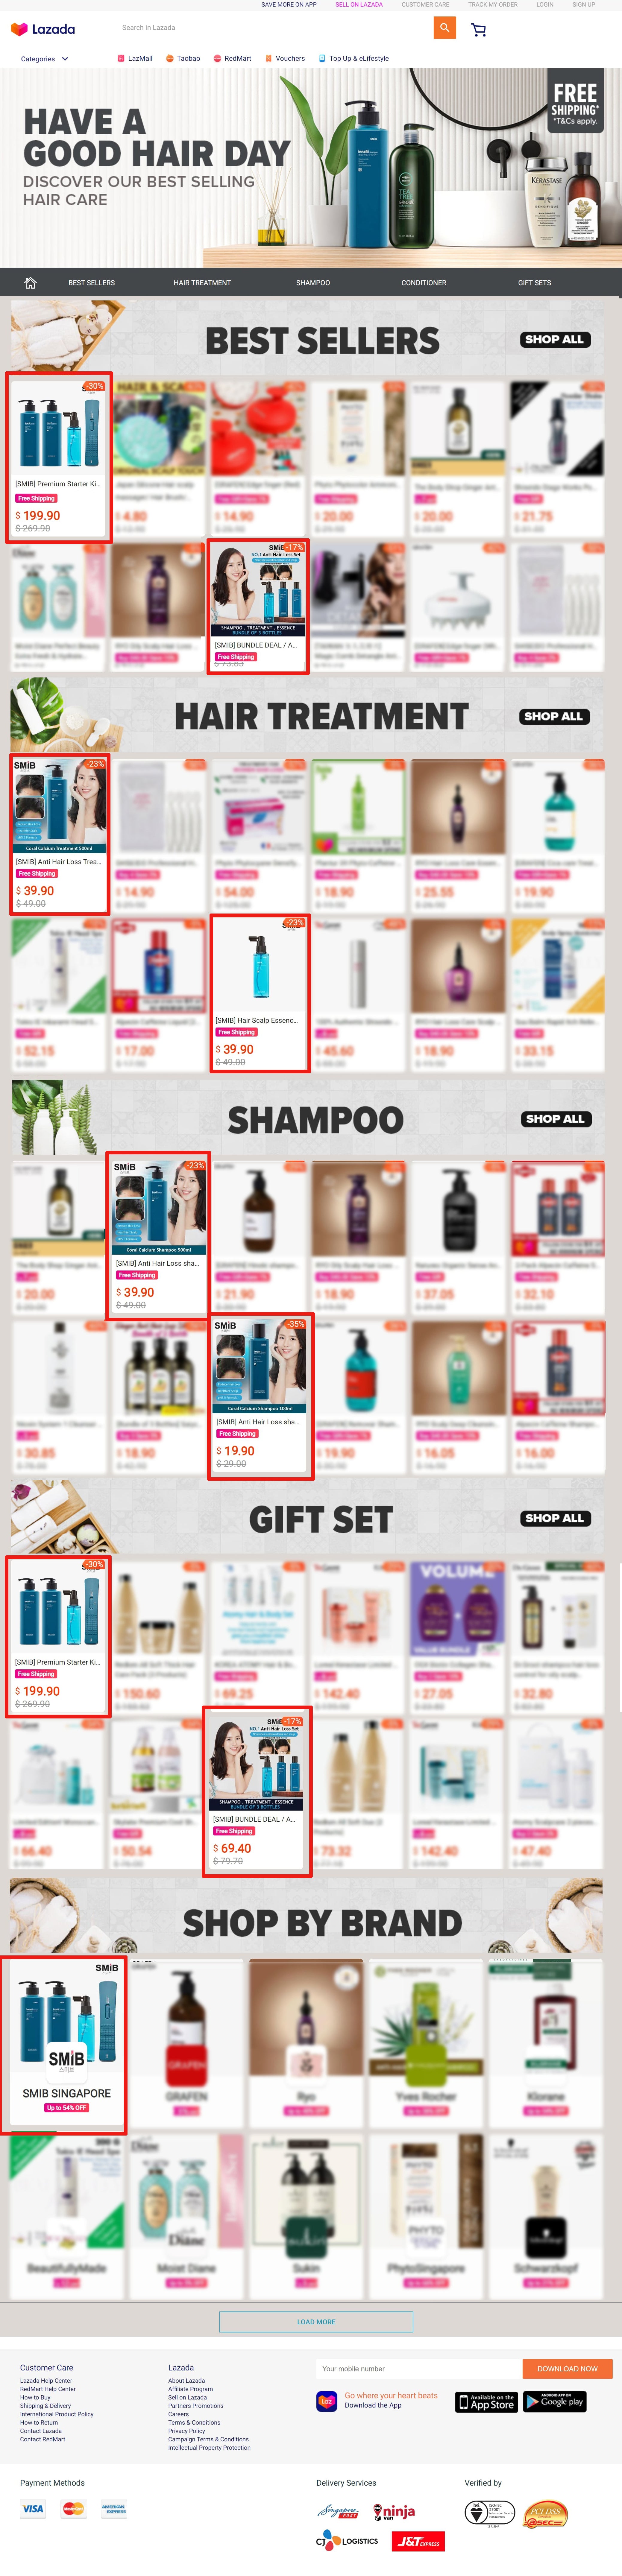 lazada singapore anit hair loss shampoo best seller